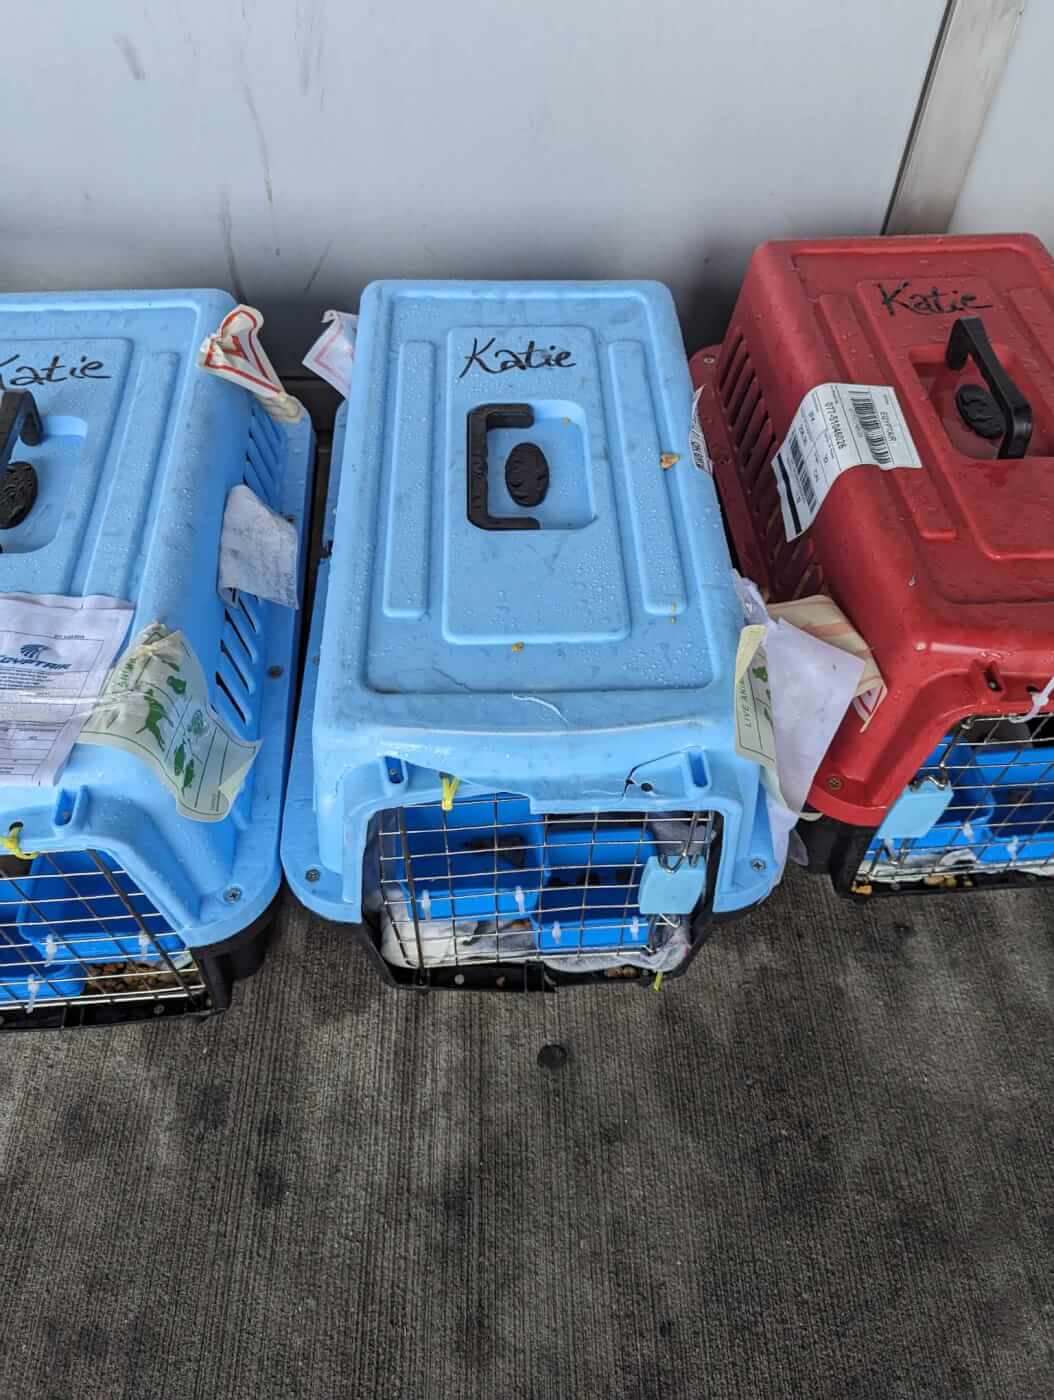 Row of damaged crates